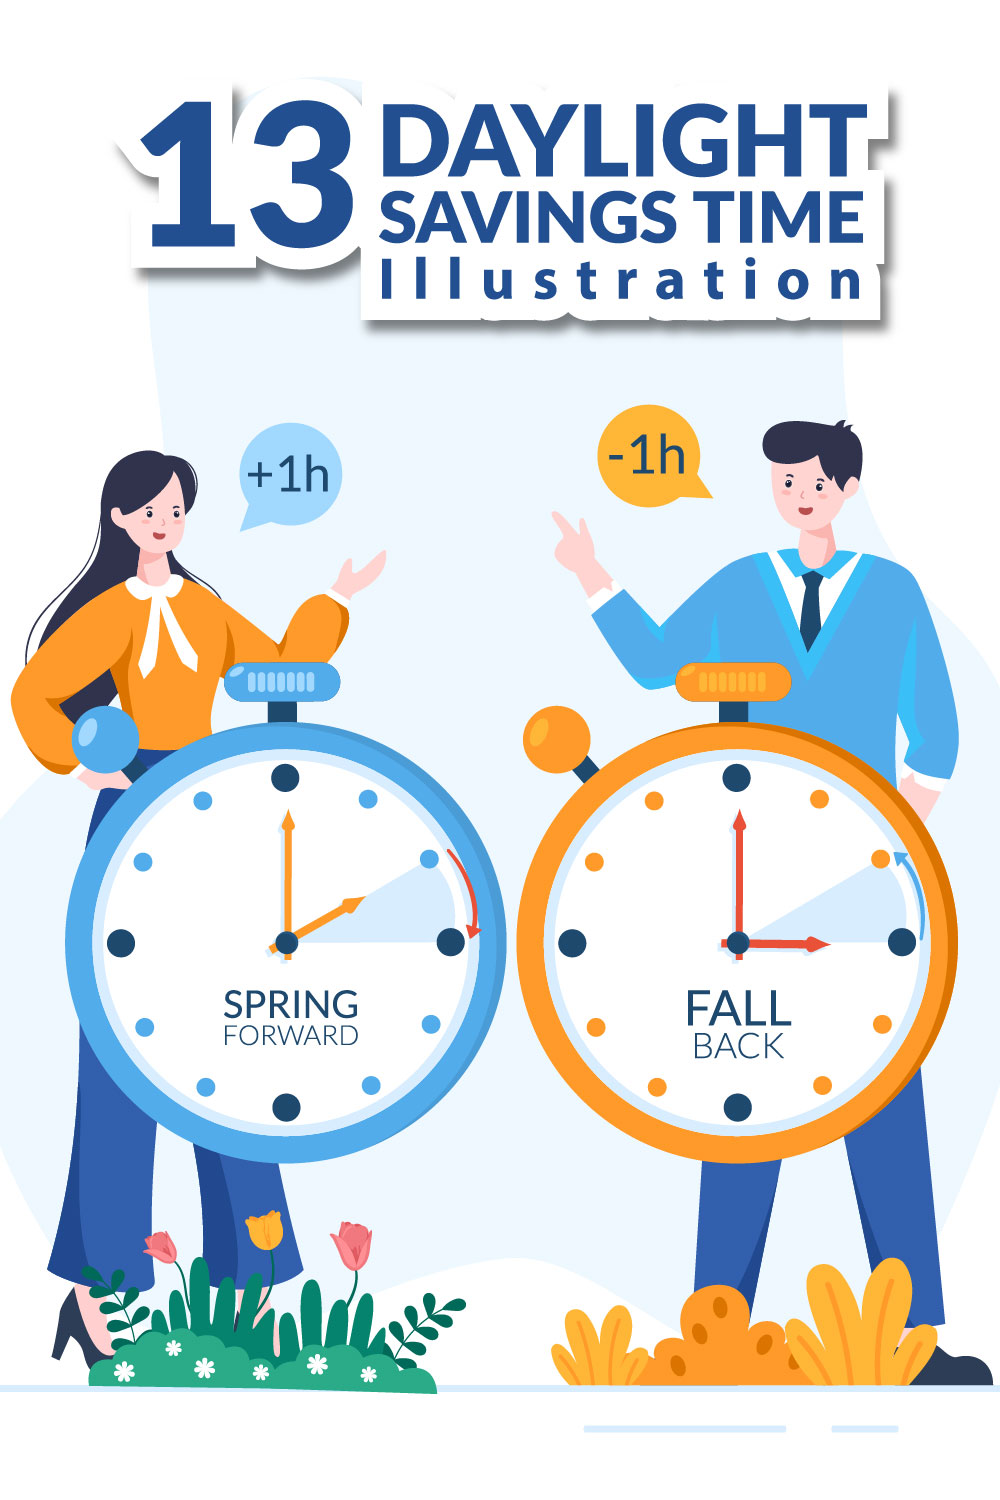 13 Daylight Savings Time Illustration Pinterest Image.